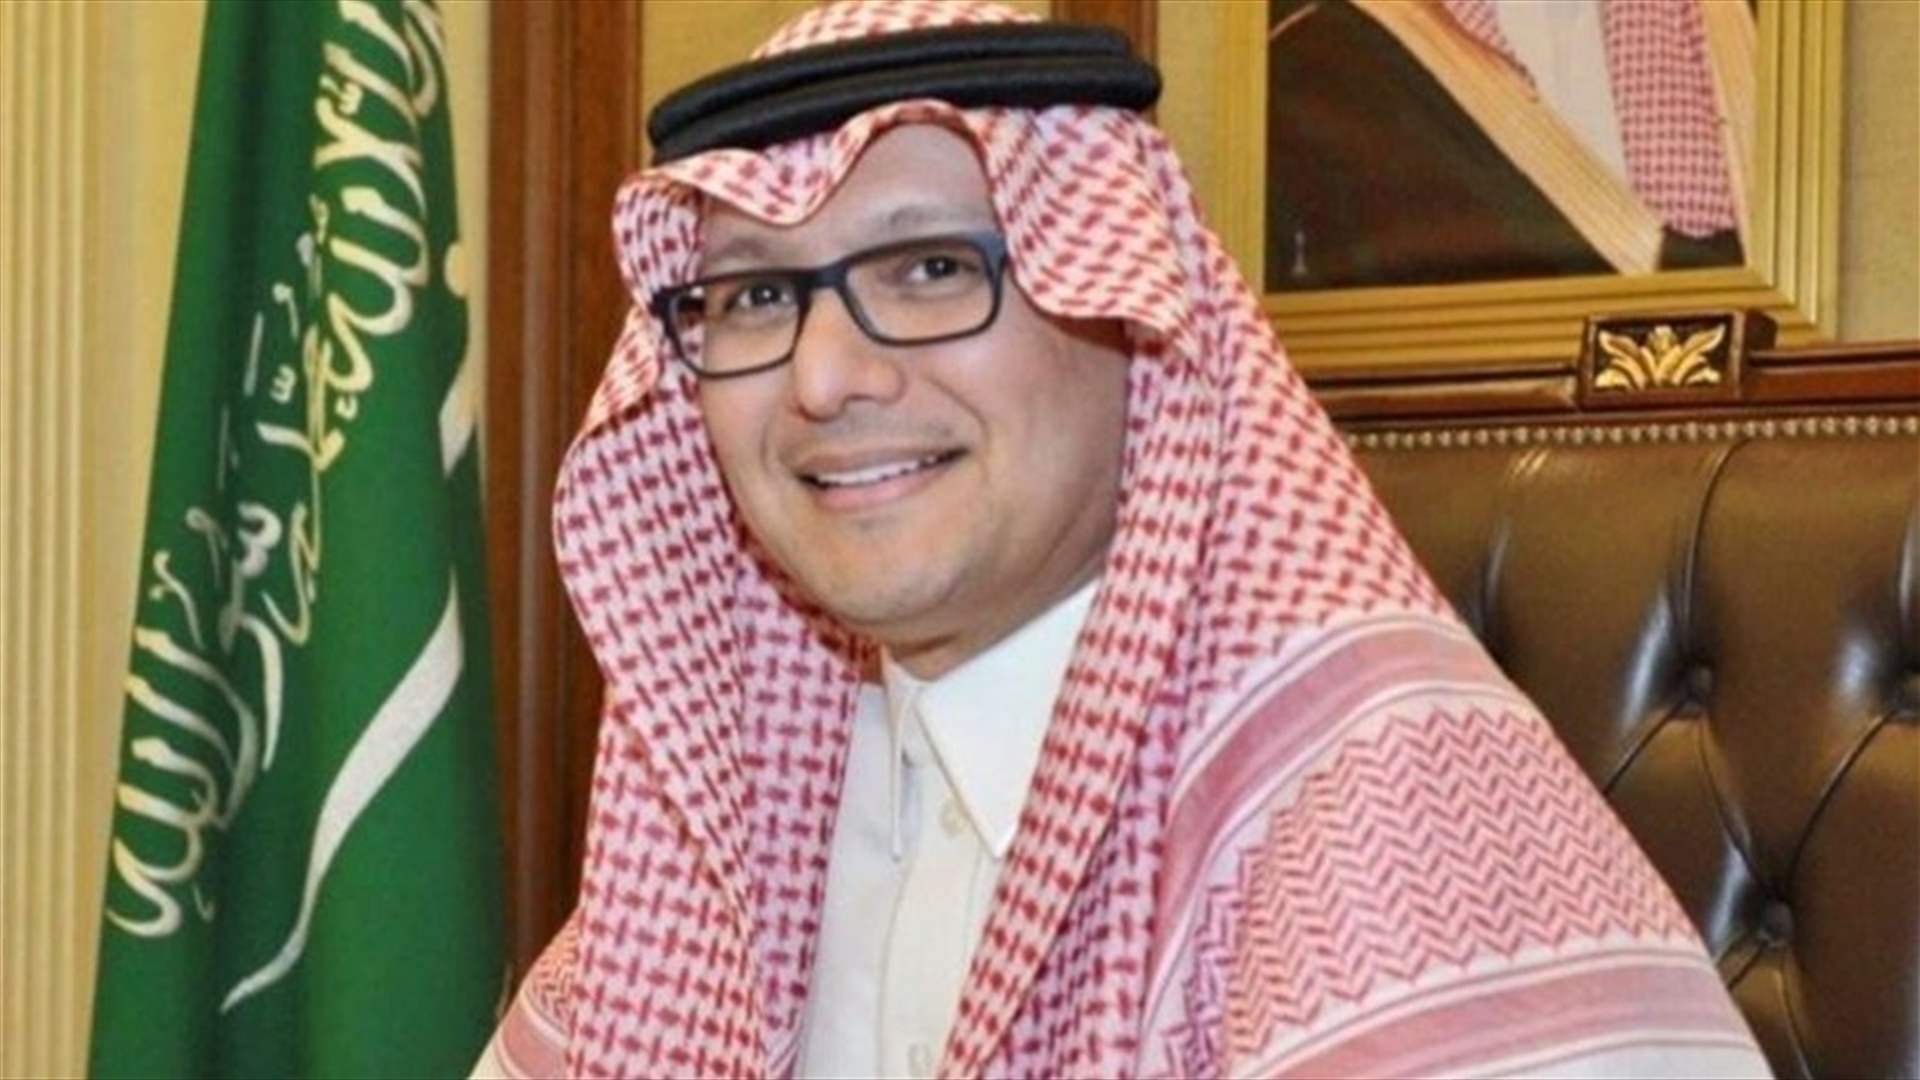 LBCI&#39;s sources: Saudi Ambassador&#39;s visit to Ain el-Tineh tomorrow is unrelated to Quintet&#39;s ambassadors&#39; visit plans